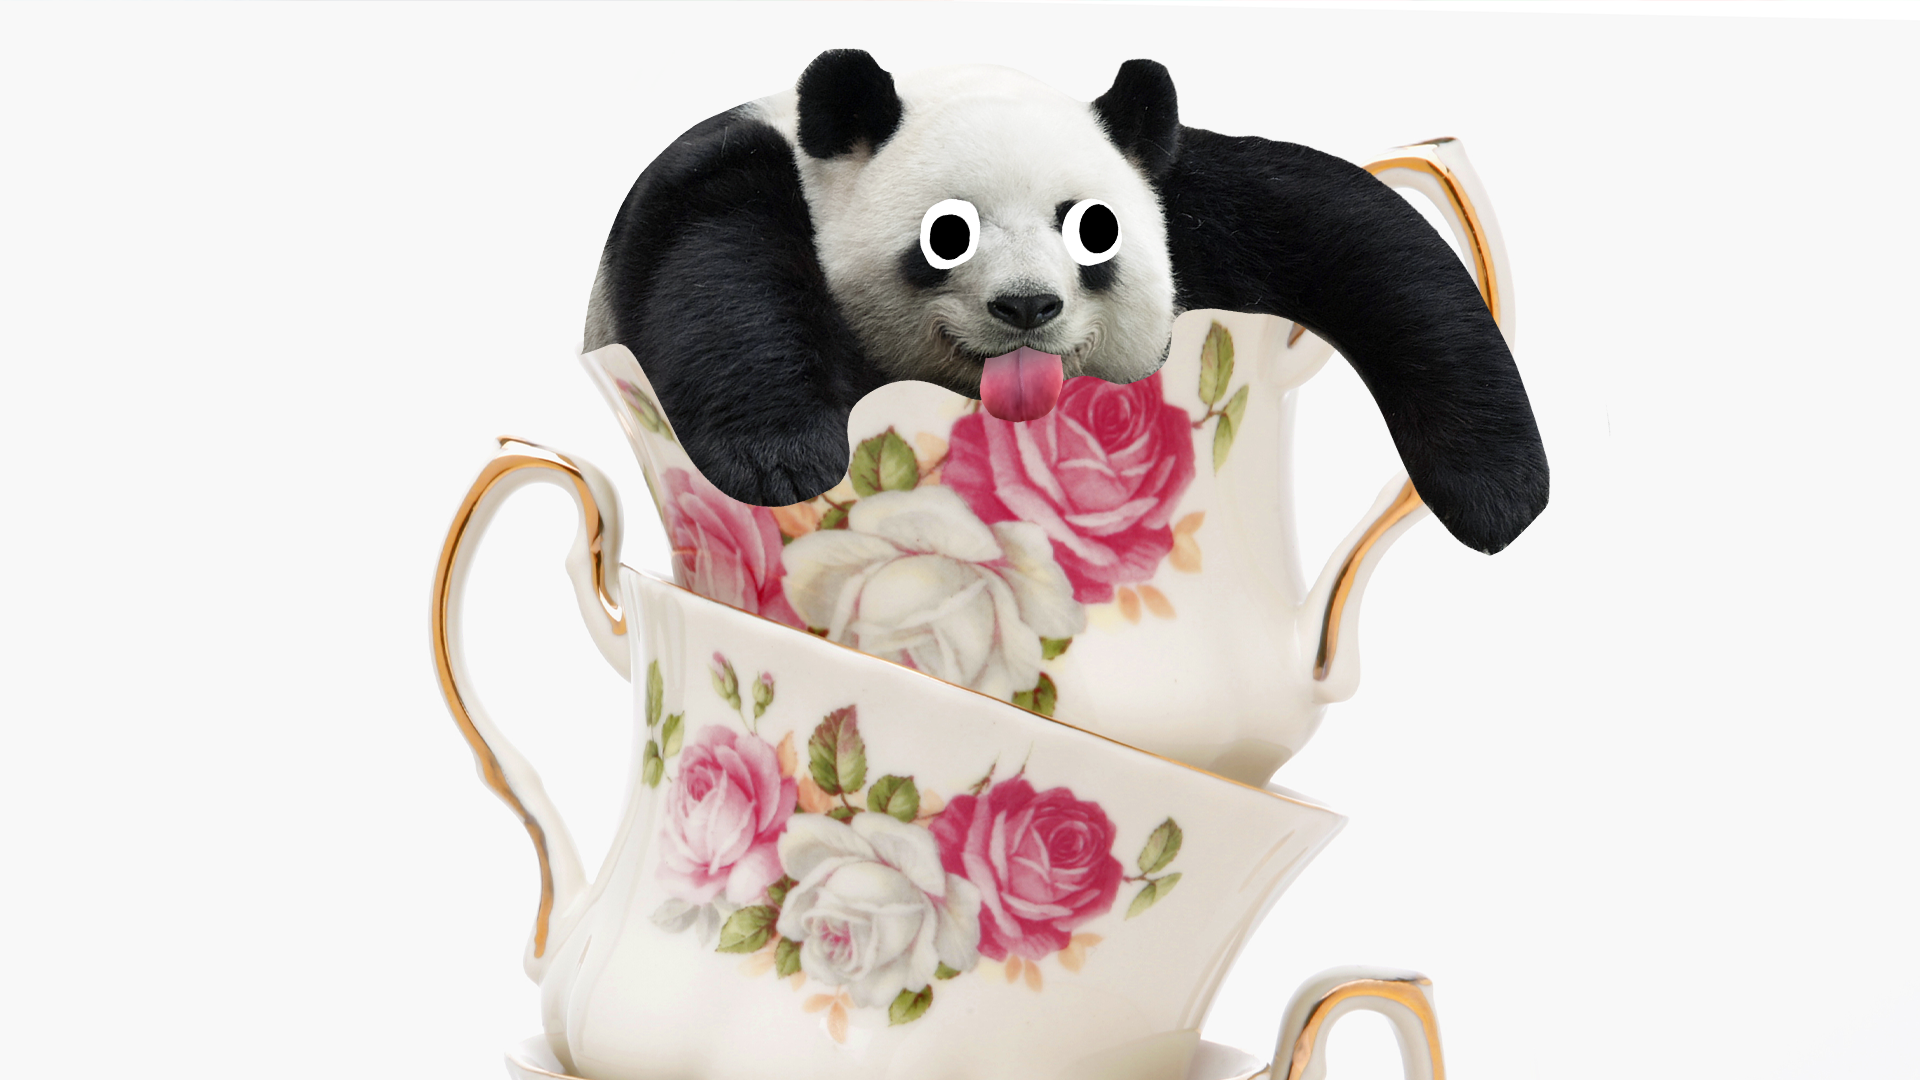 Derpy panda in a teacup